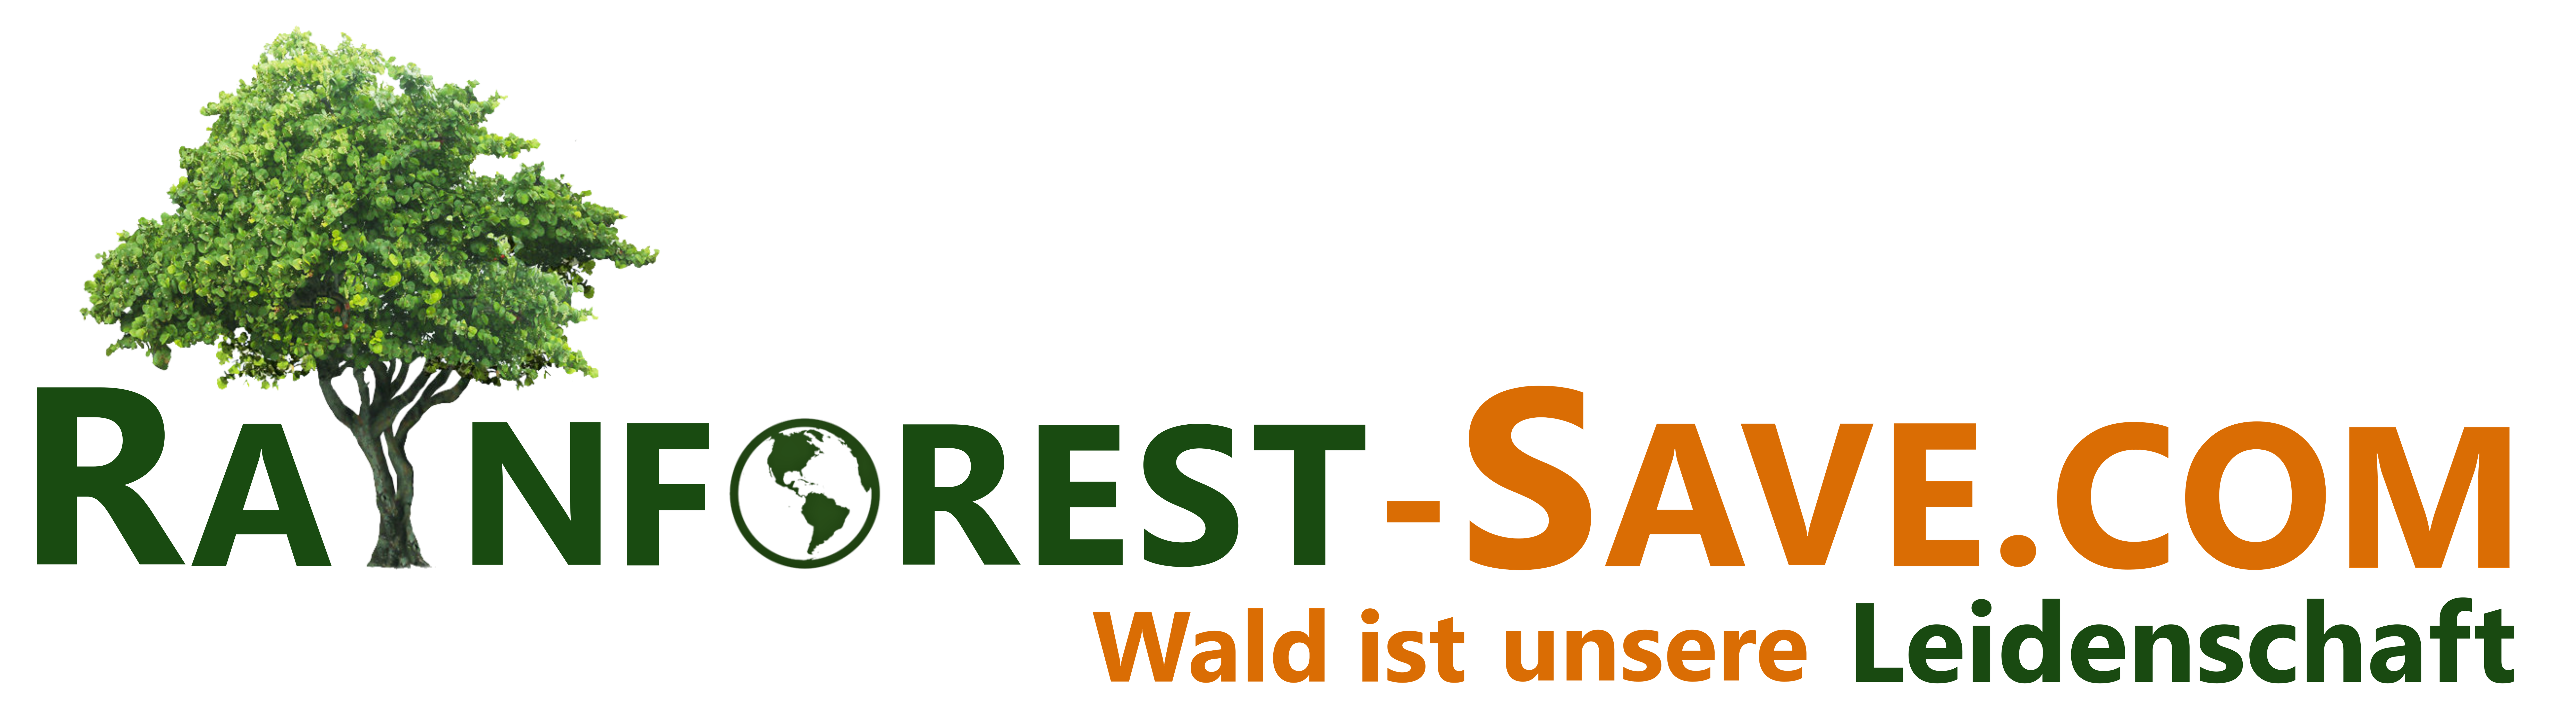 Rainforest-Save